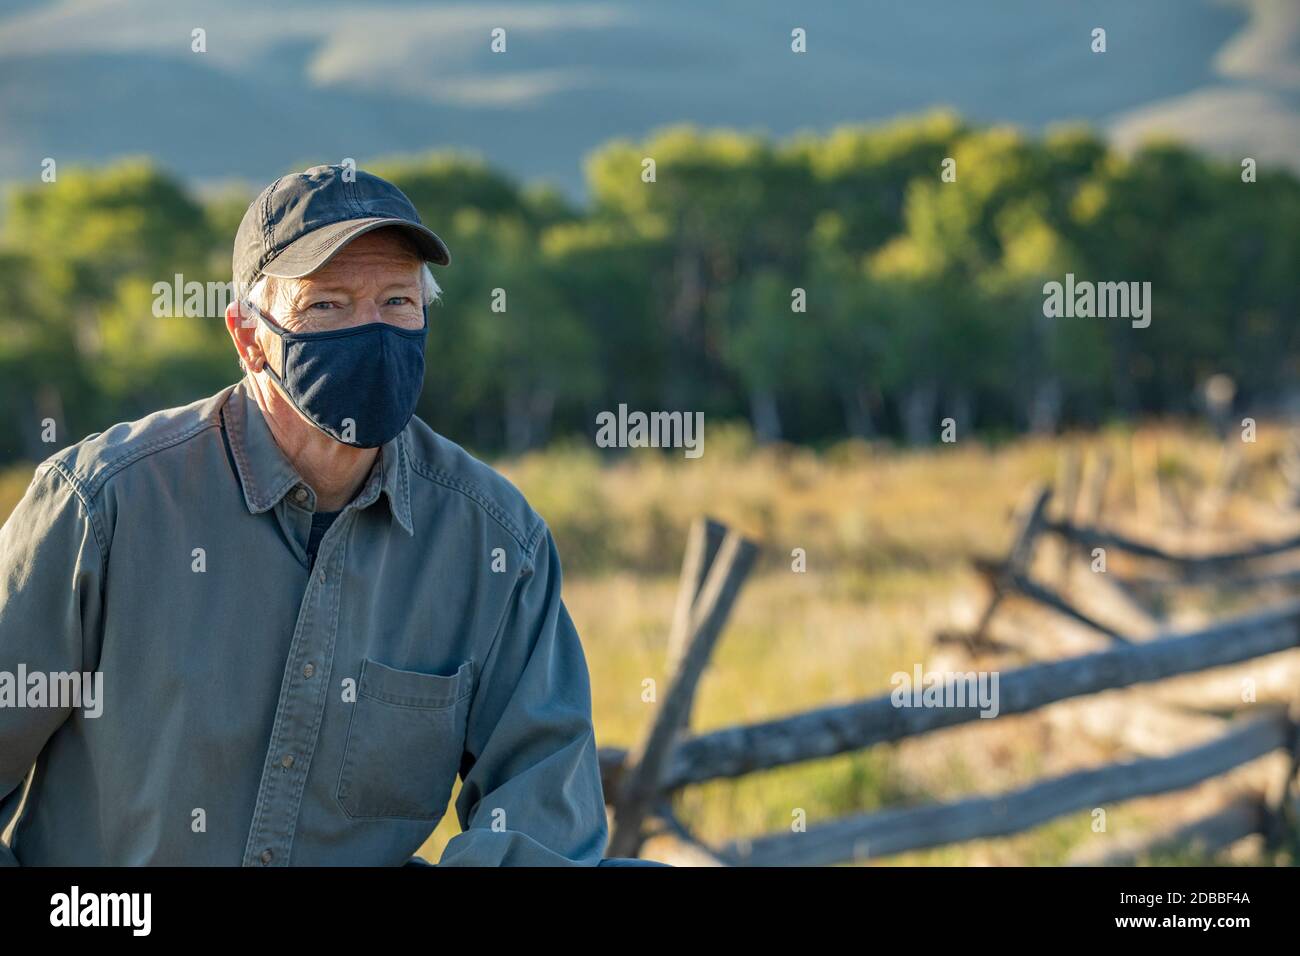 USA, Idaho, Bellevue, Portrait of farmer in face mask Stock Photo